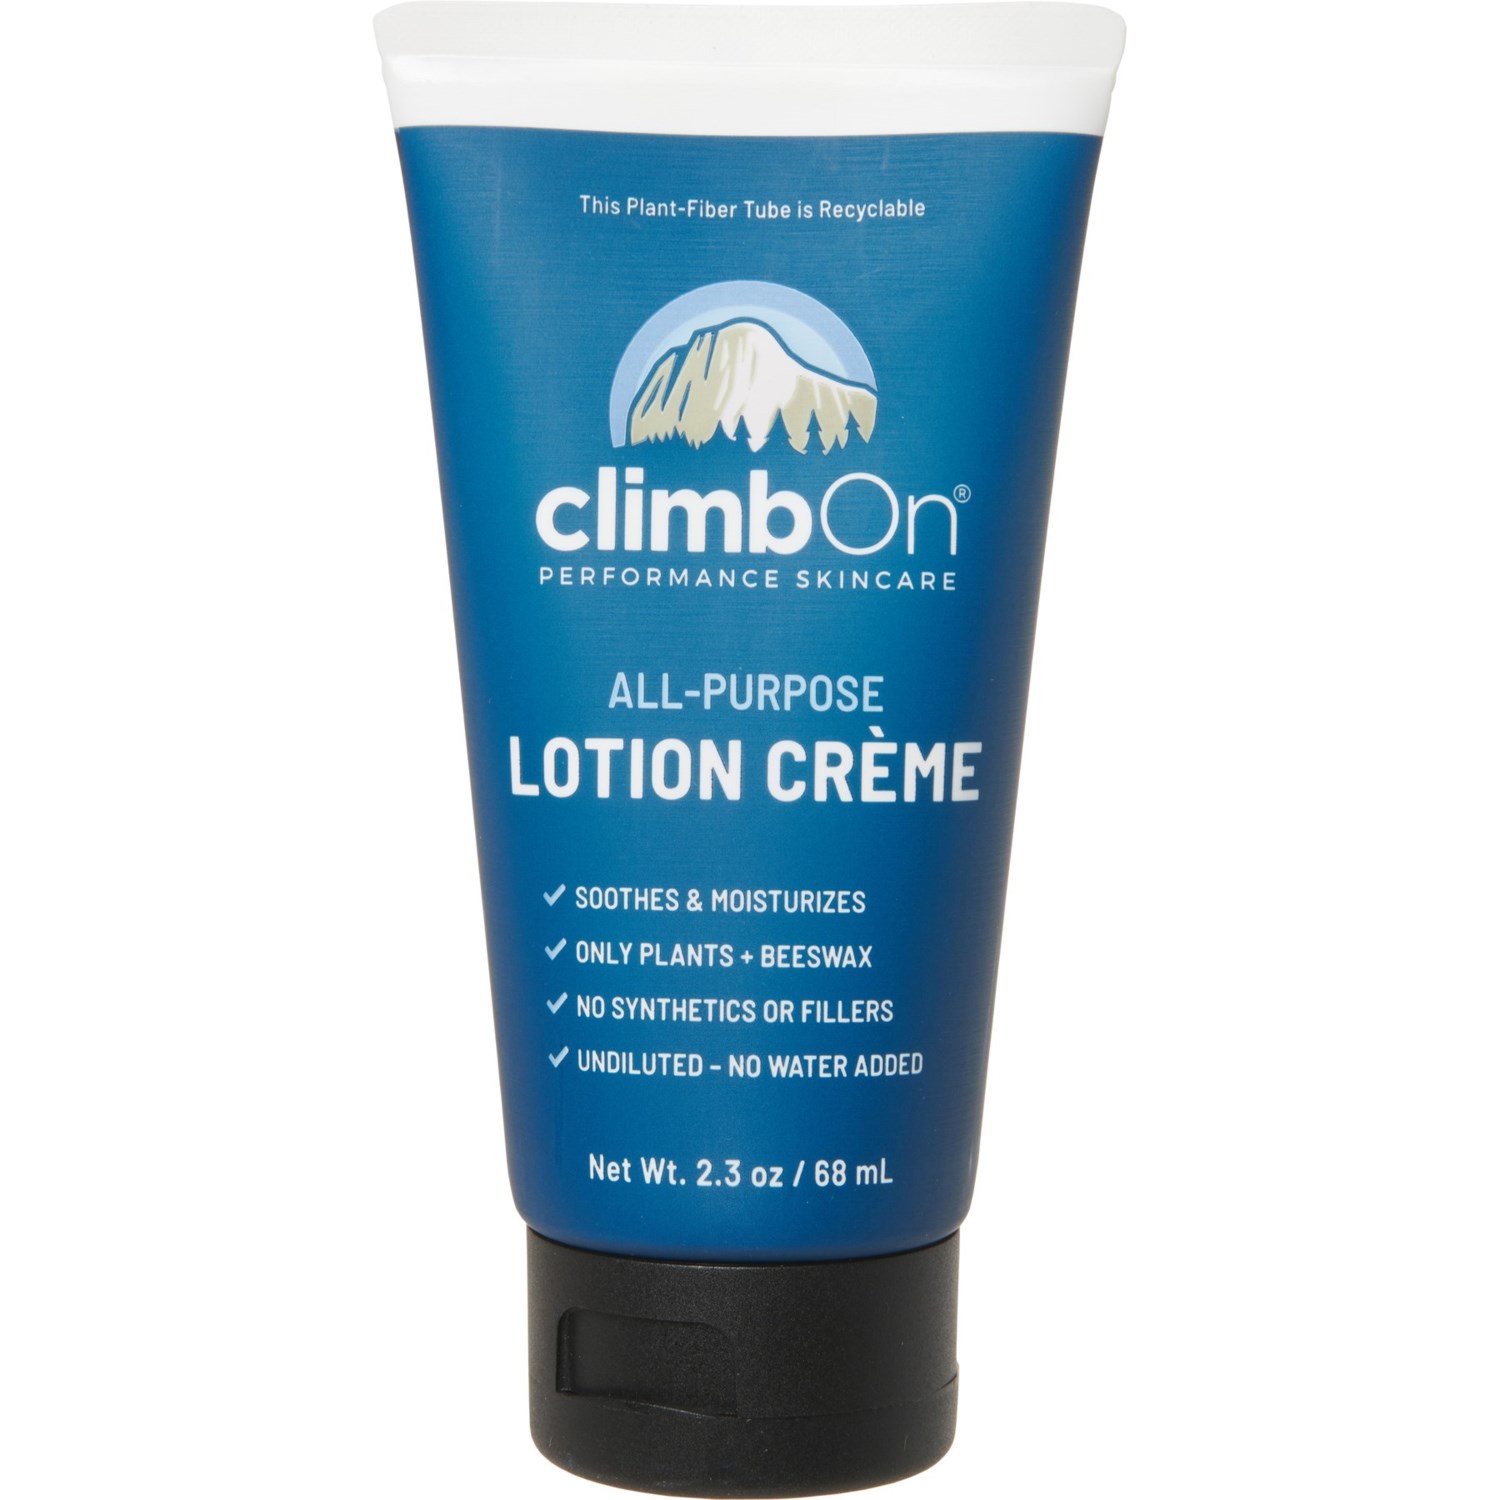 ClimbOn All-Purpose Lotion Creme - 2.3 oz.